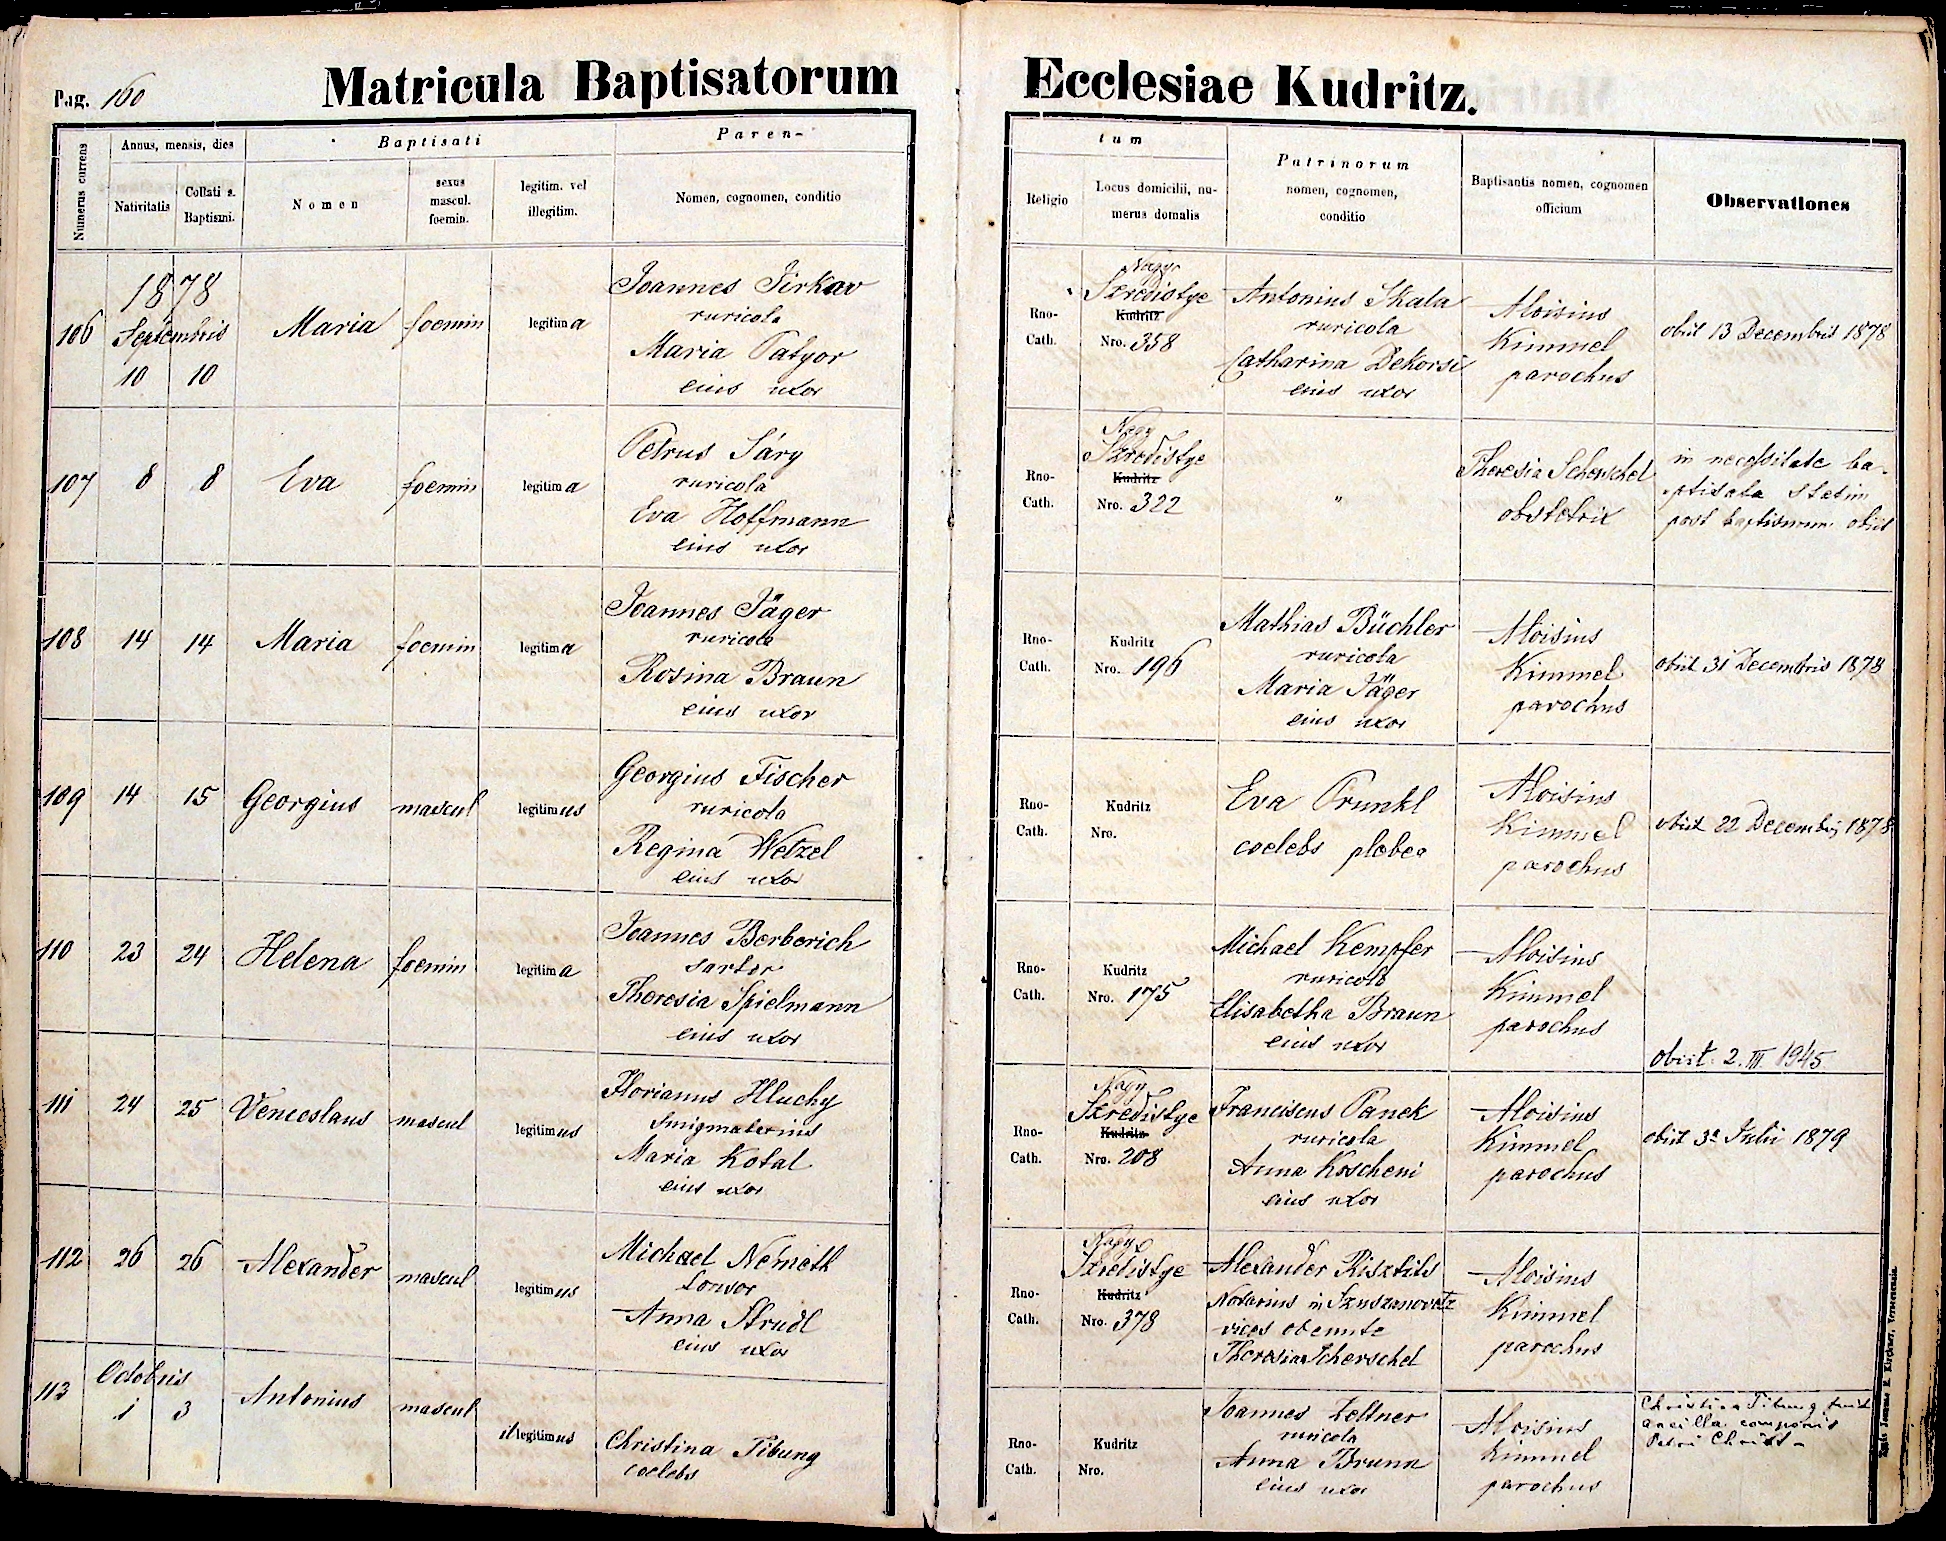 images/church_records/BIRTHS/1884-1899B/1894/160